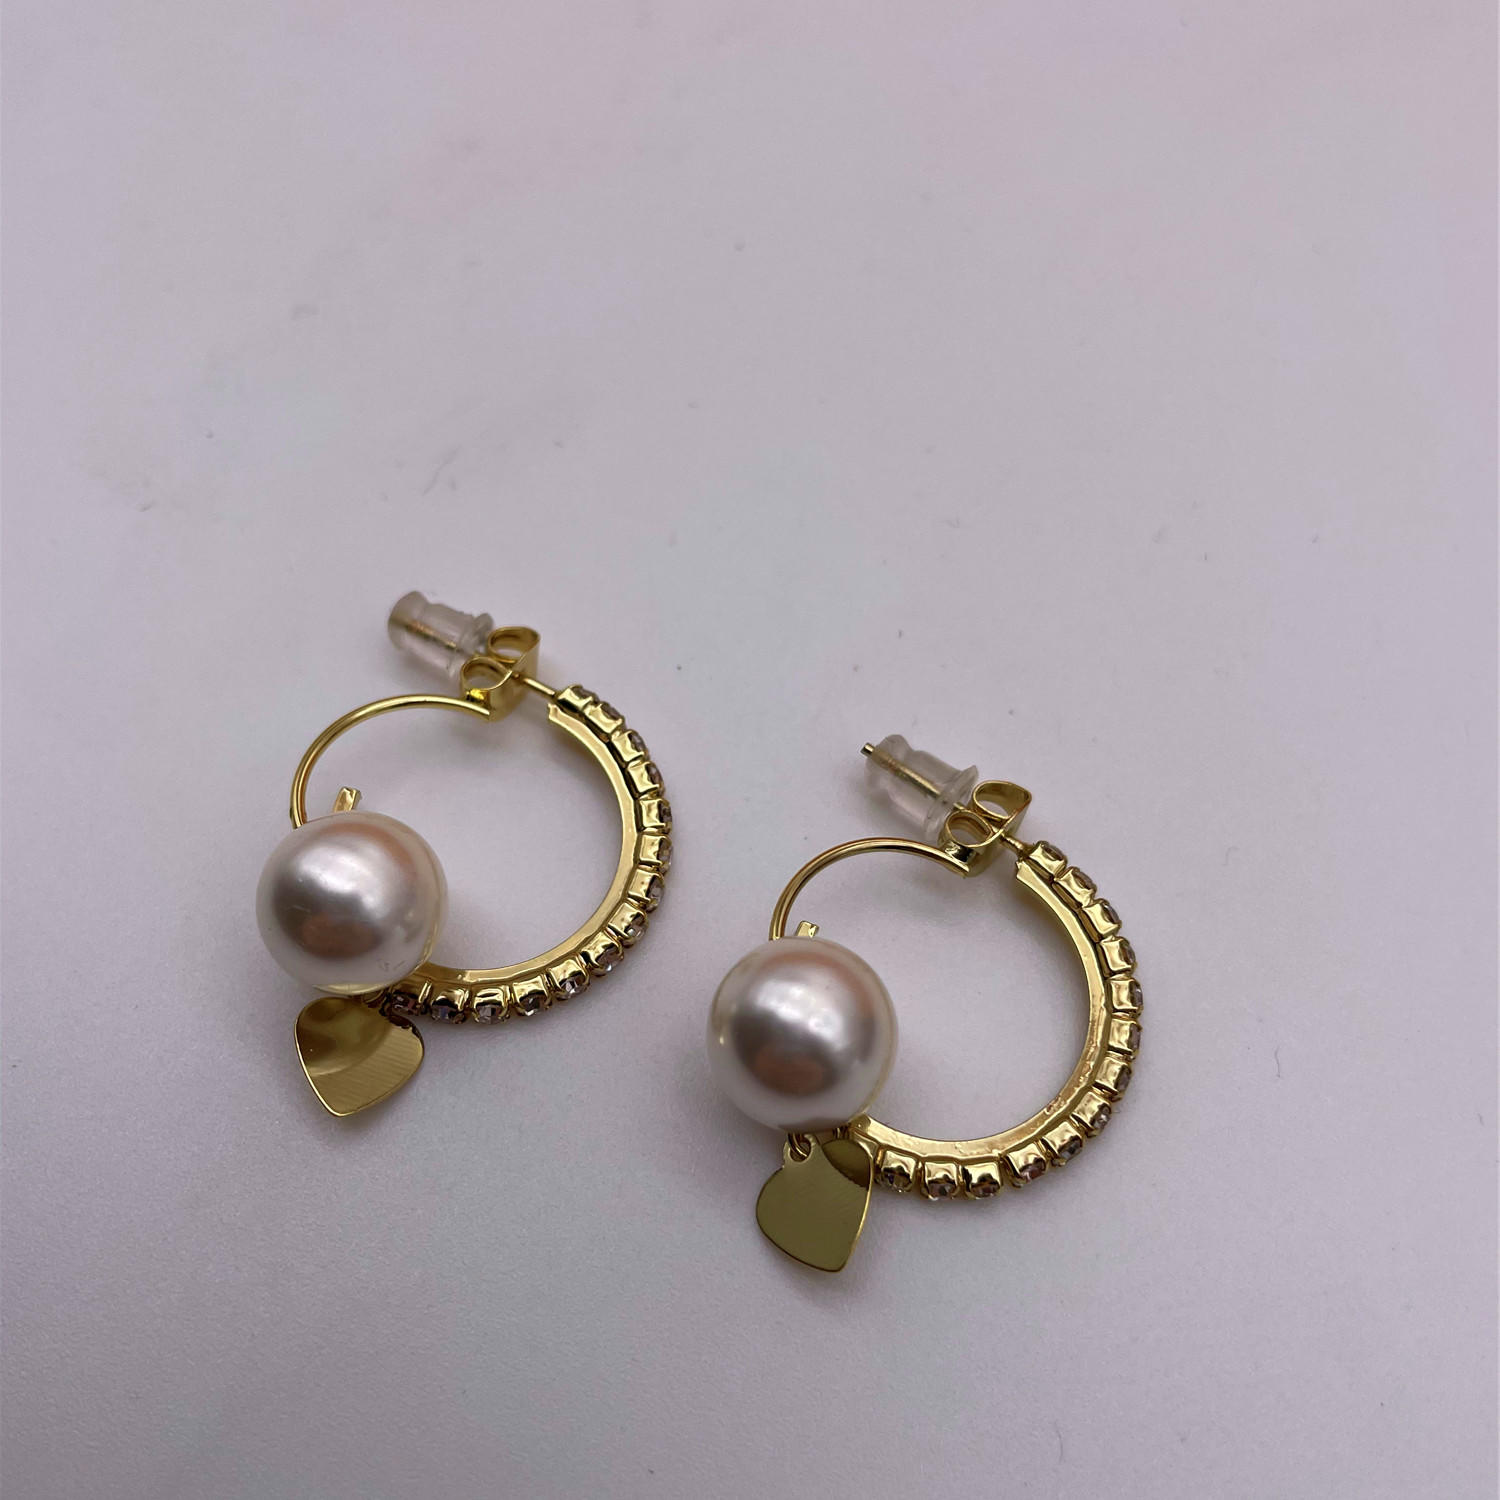 The circle earrings